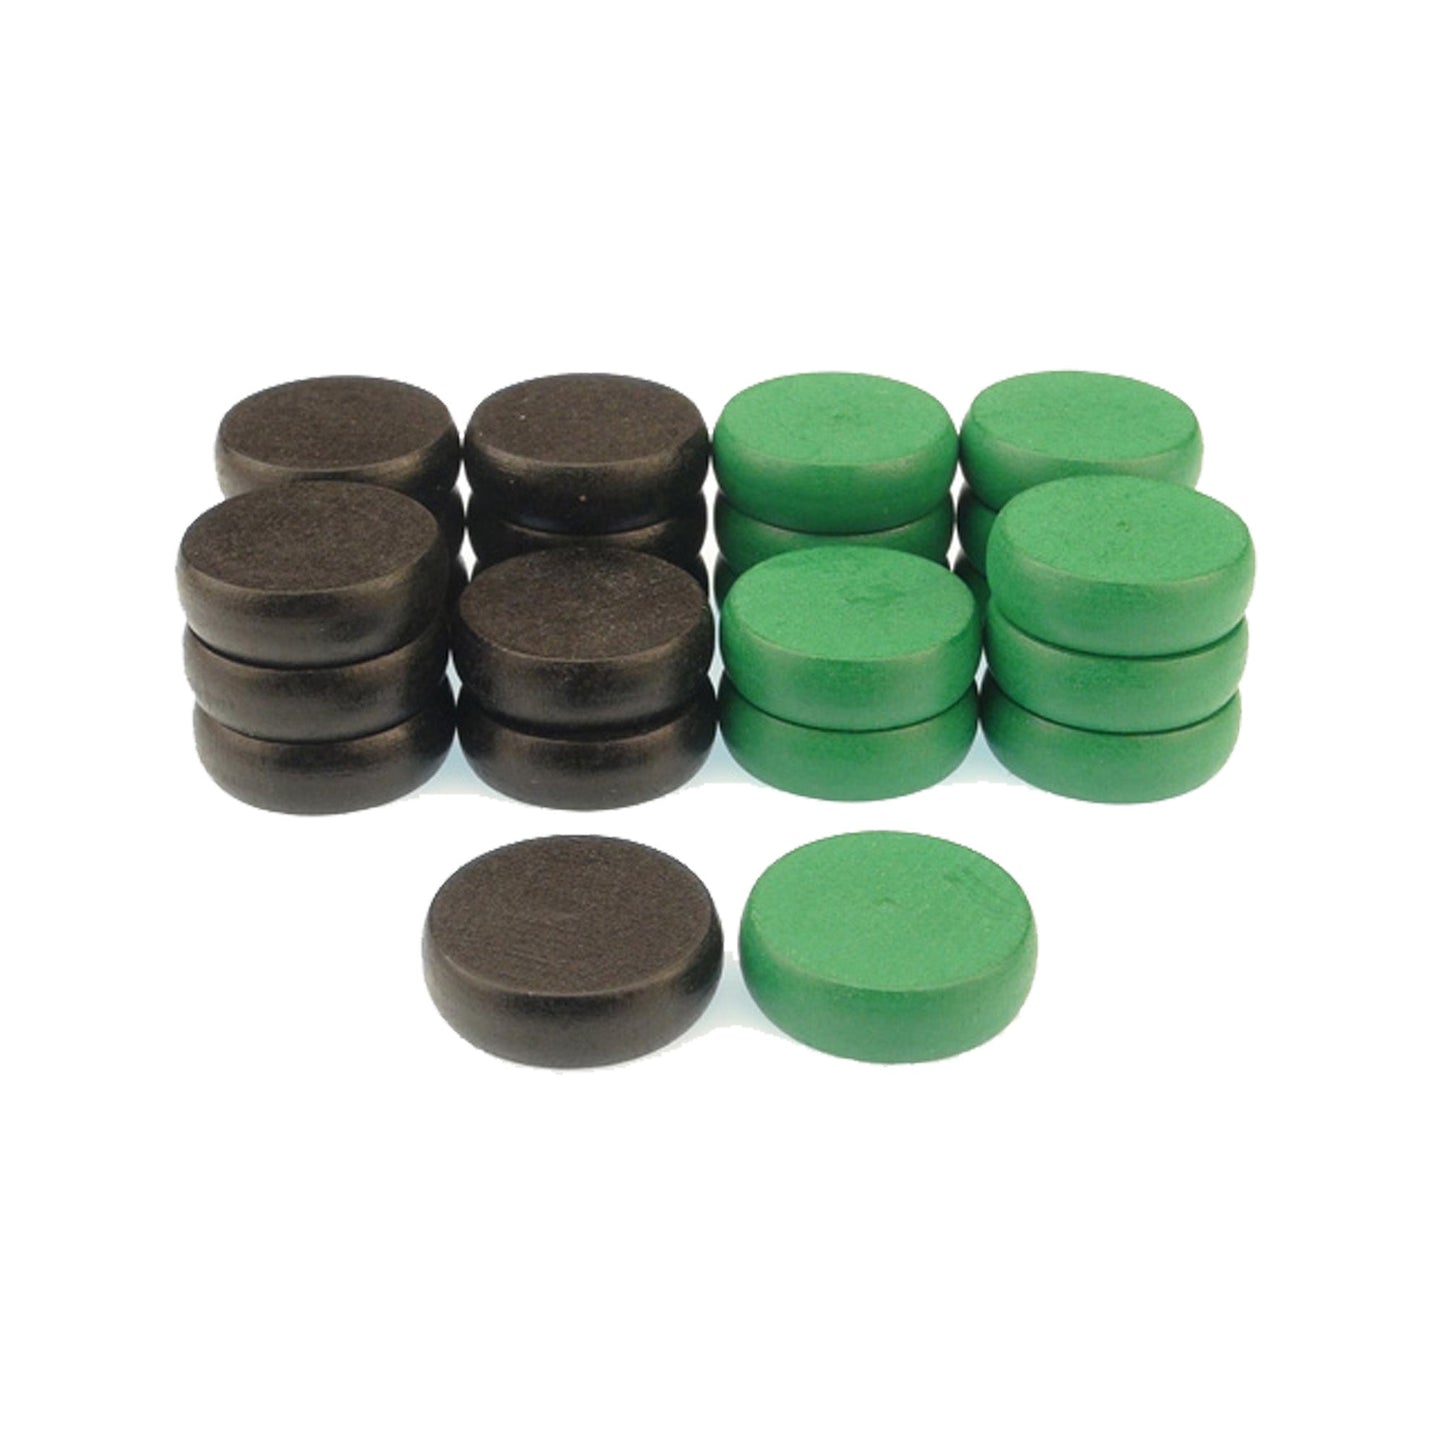 26 black-green crokinole tournament discs